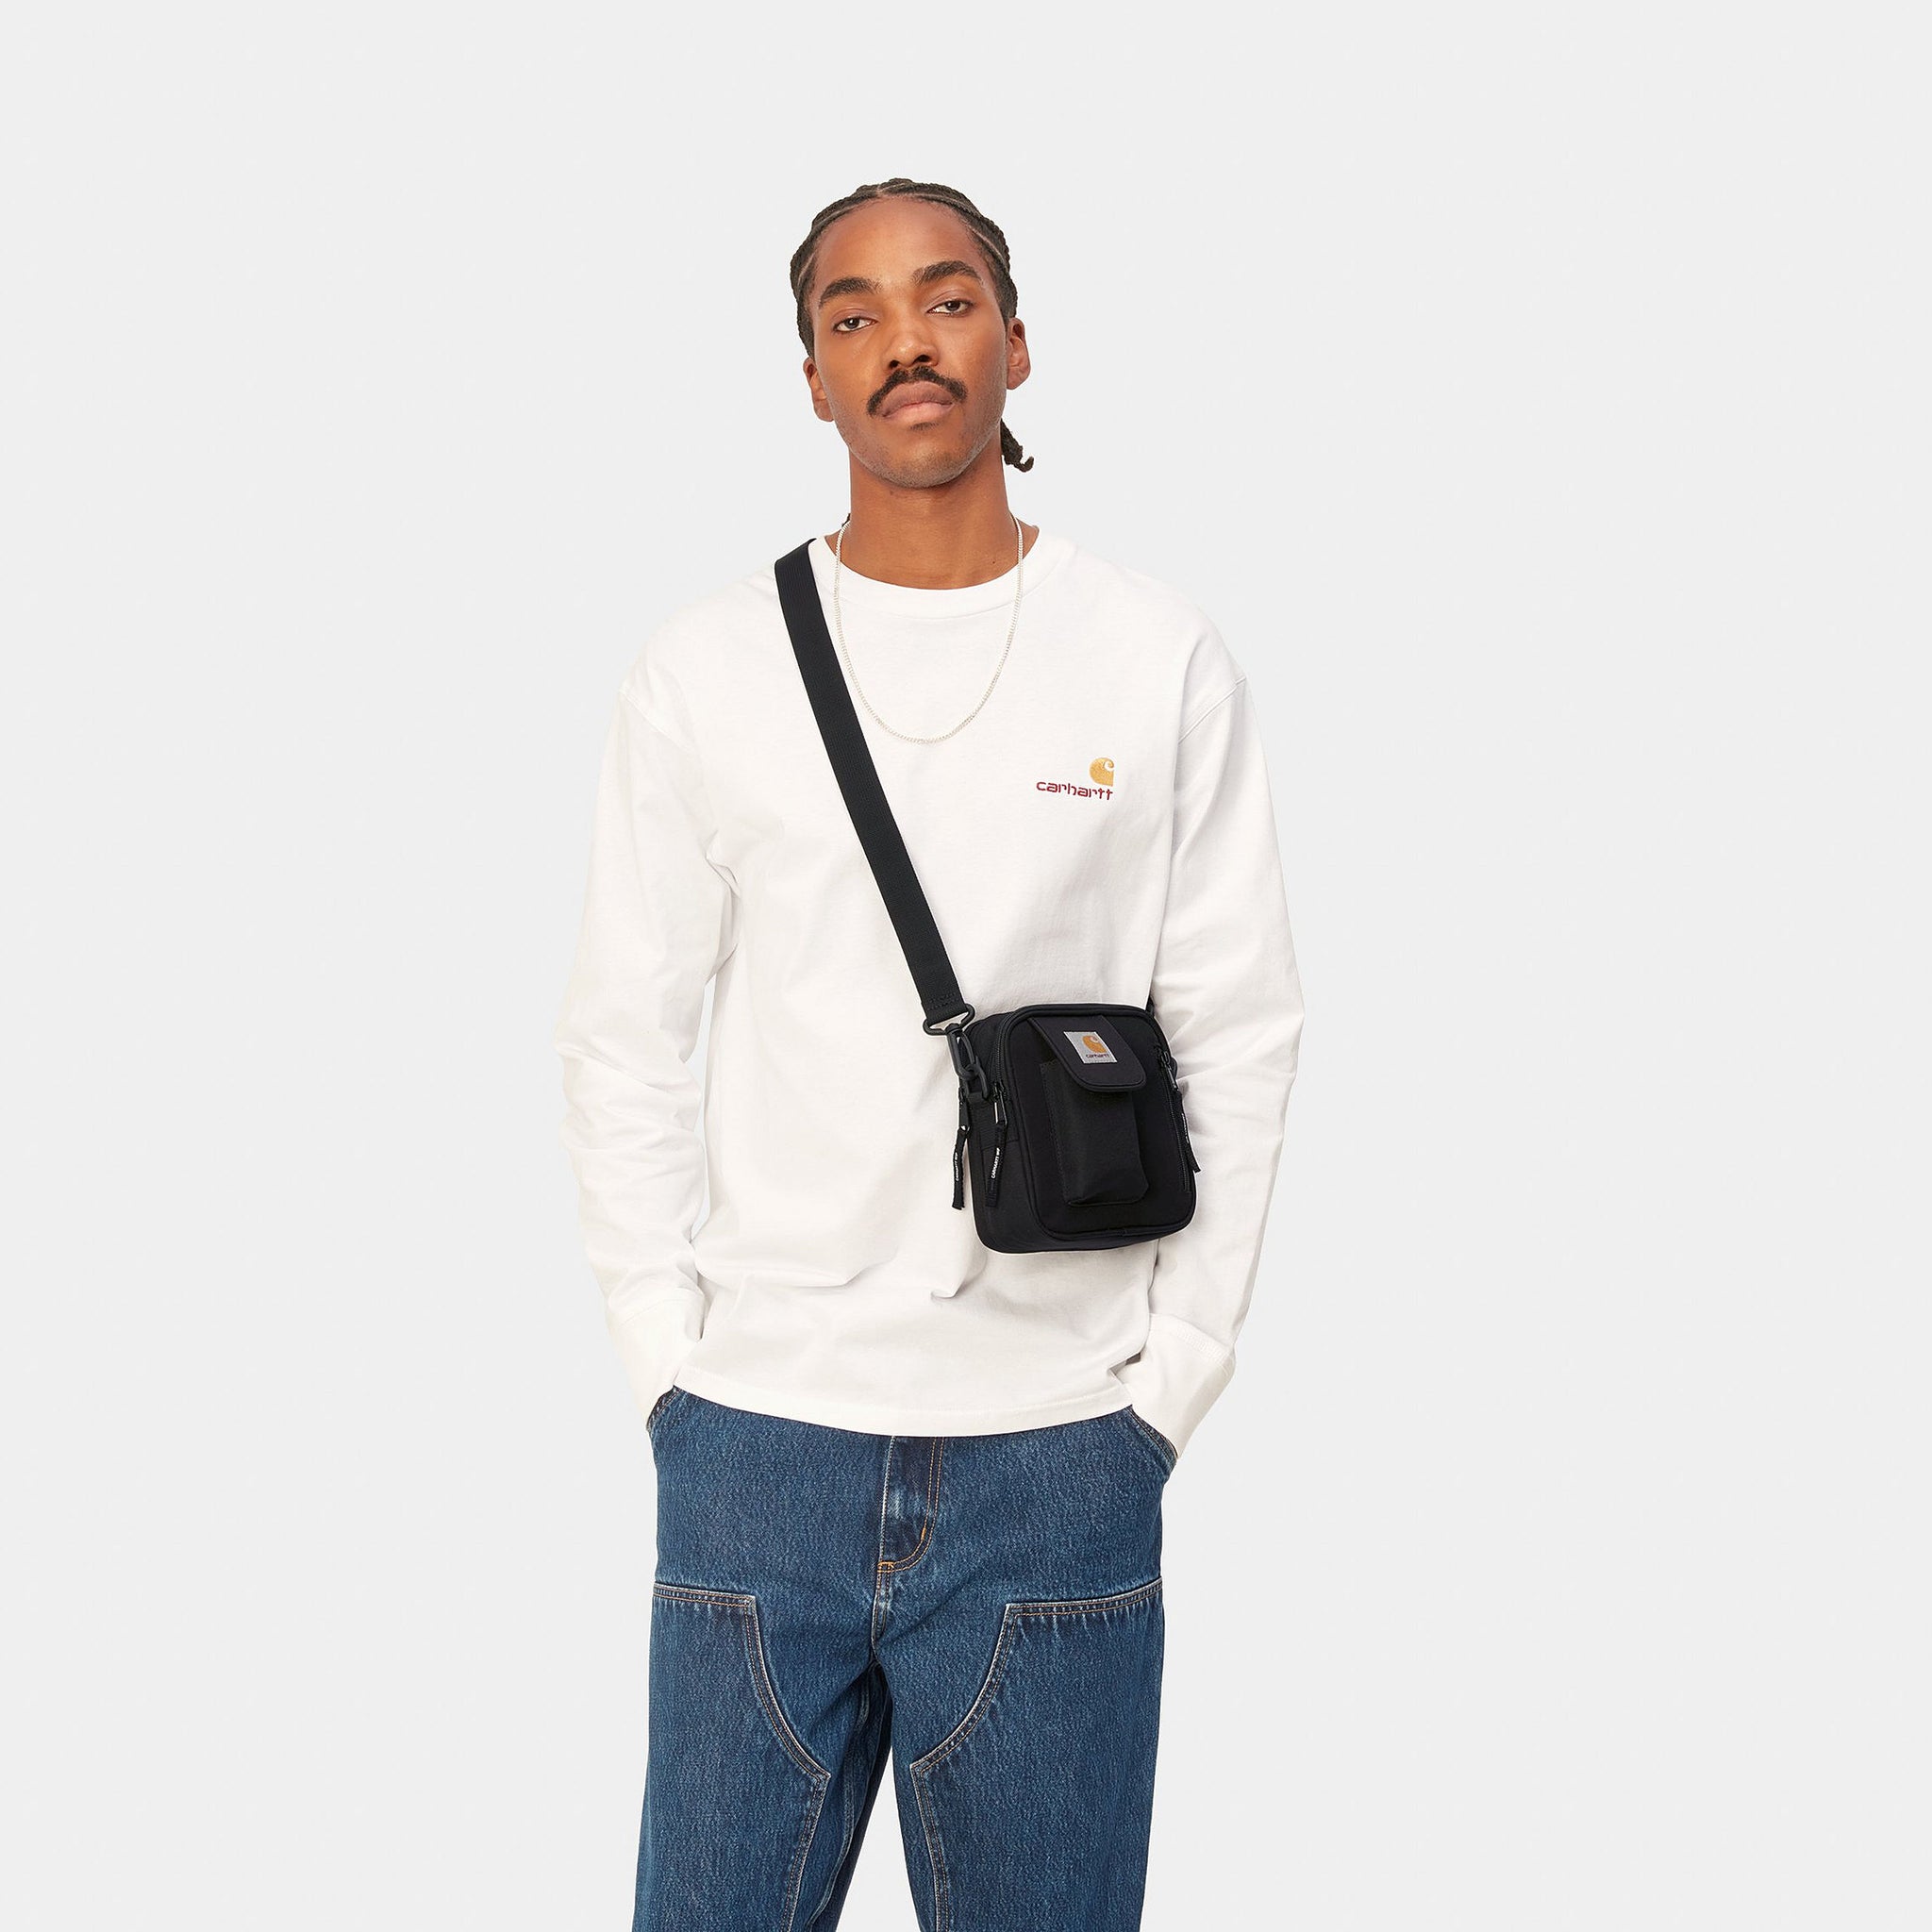 Carhartt WIP - Essentials Bag, Small (Black)